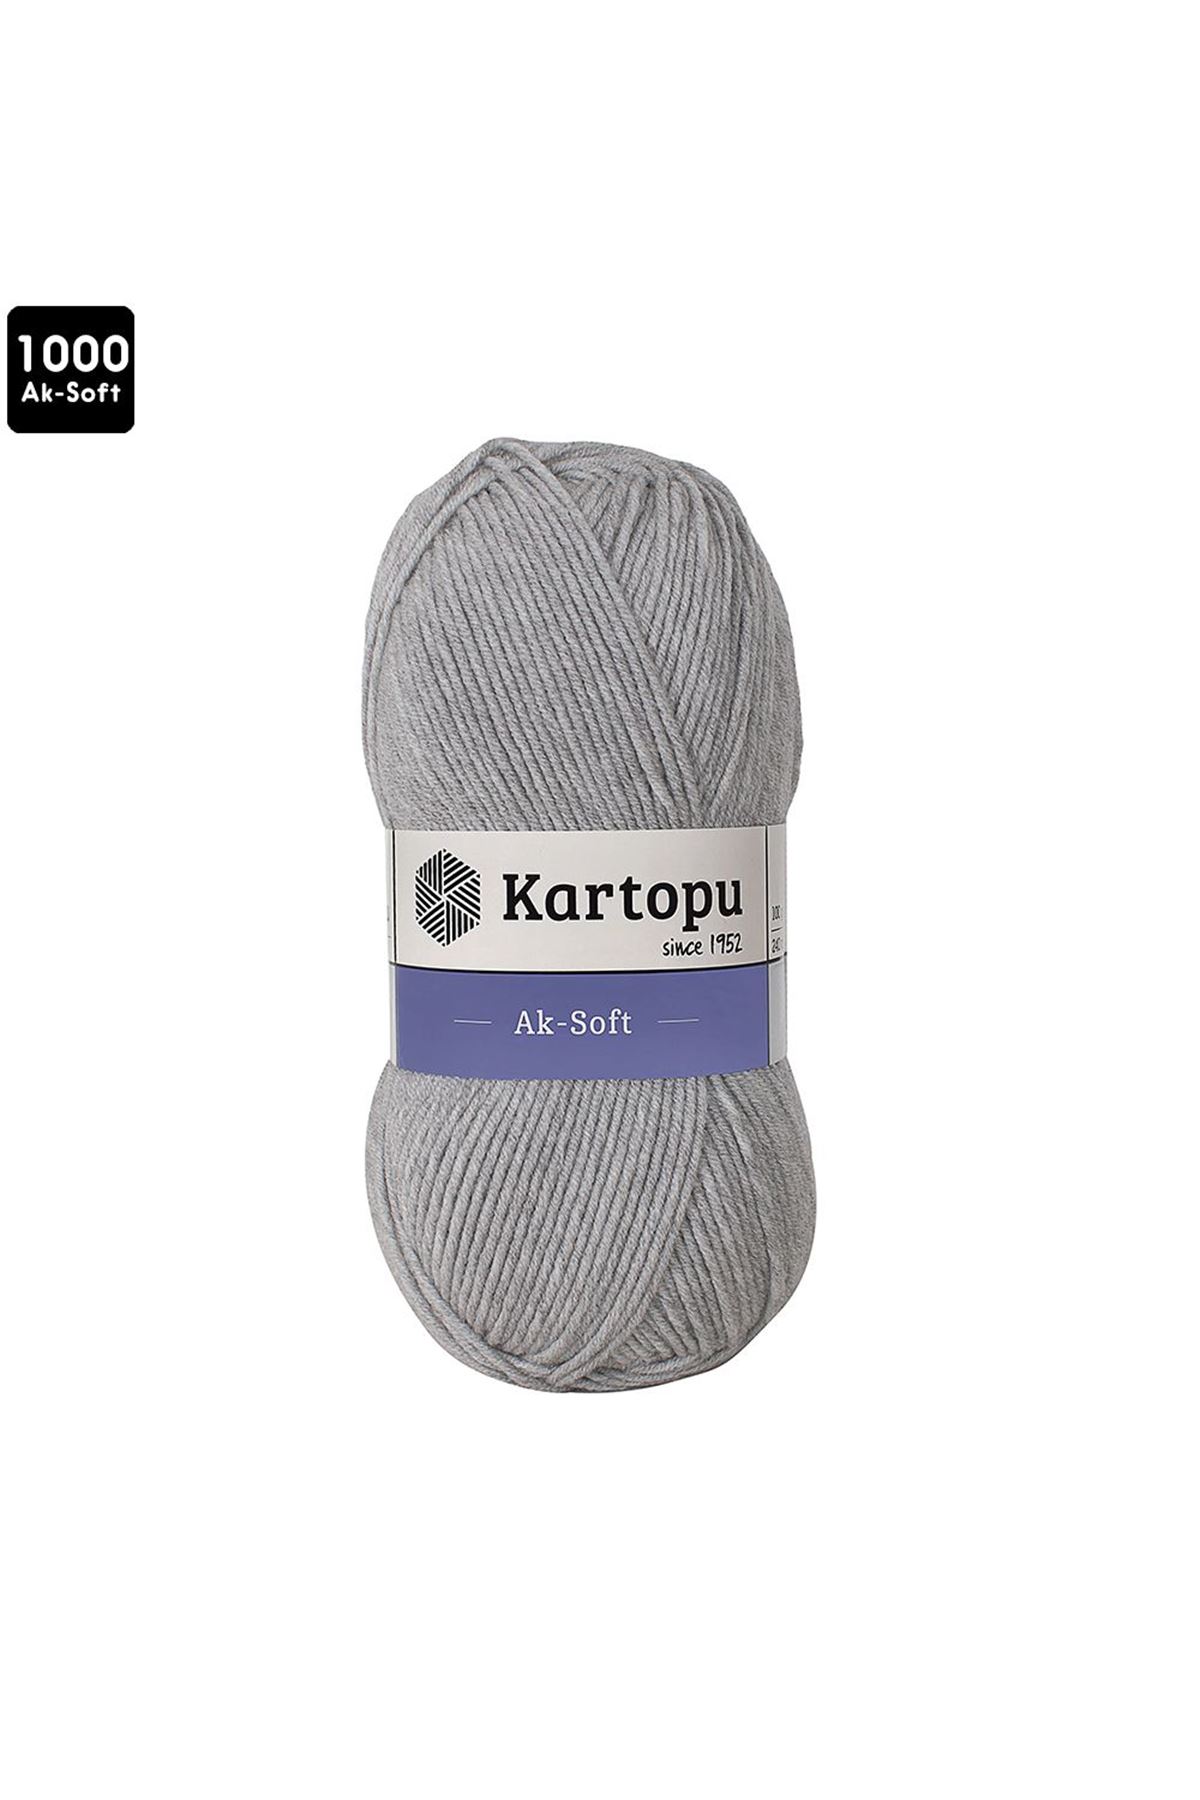 Kartopu Ak-Soft Renk No:1000